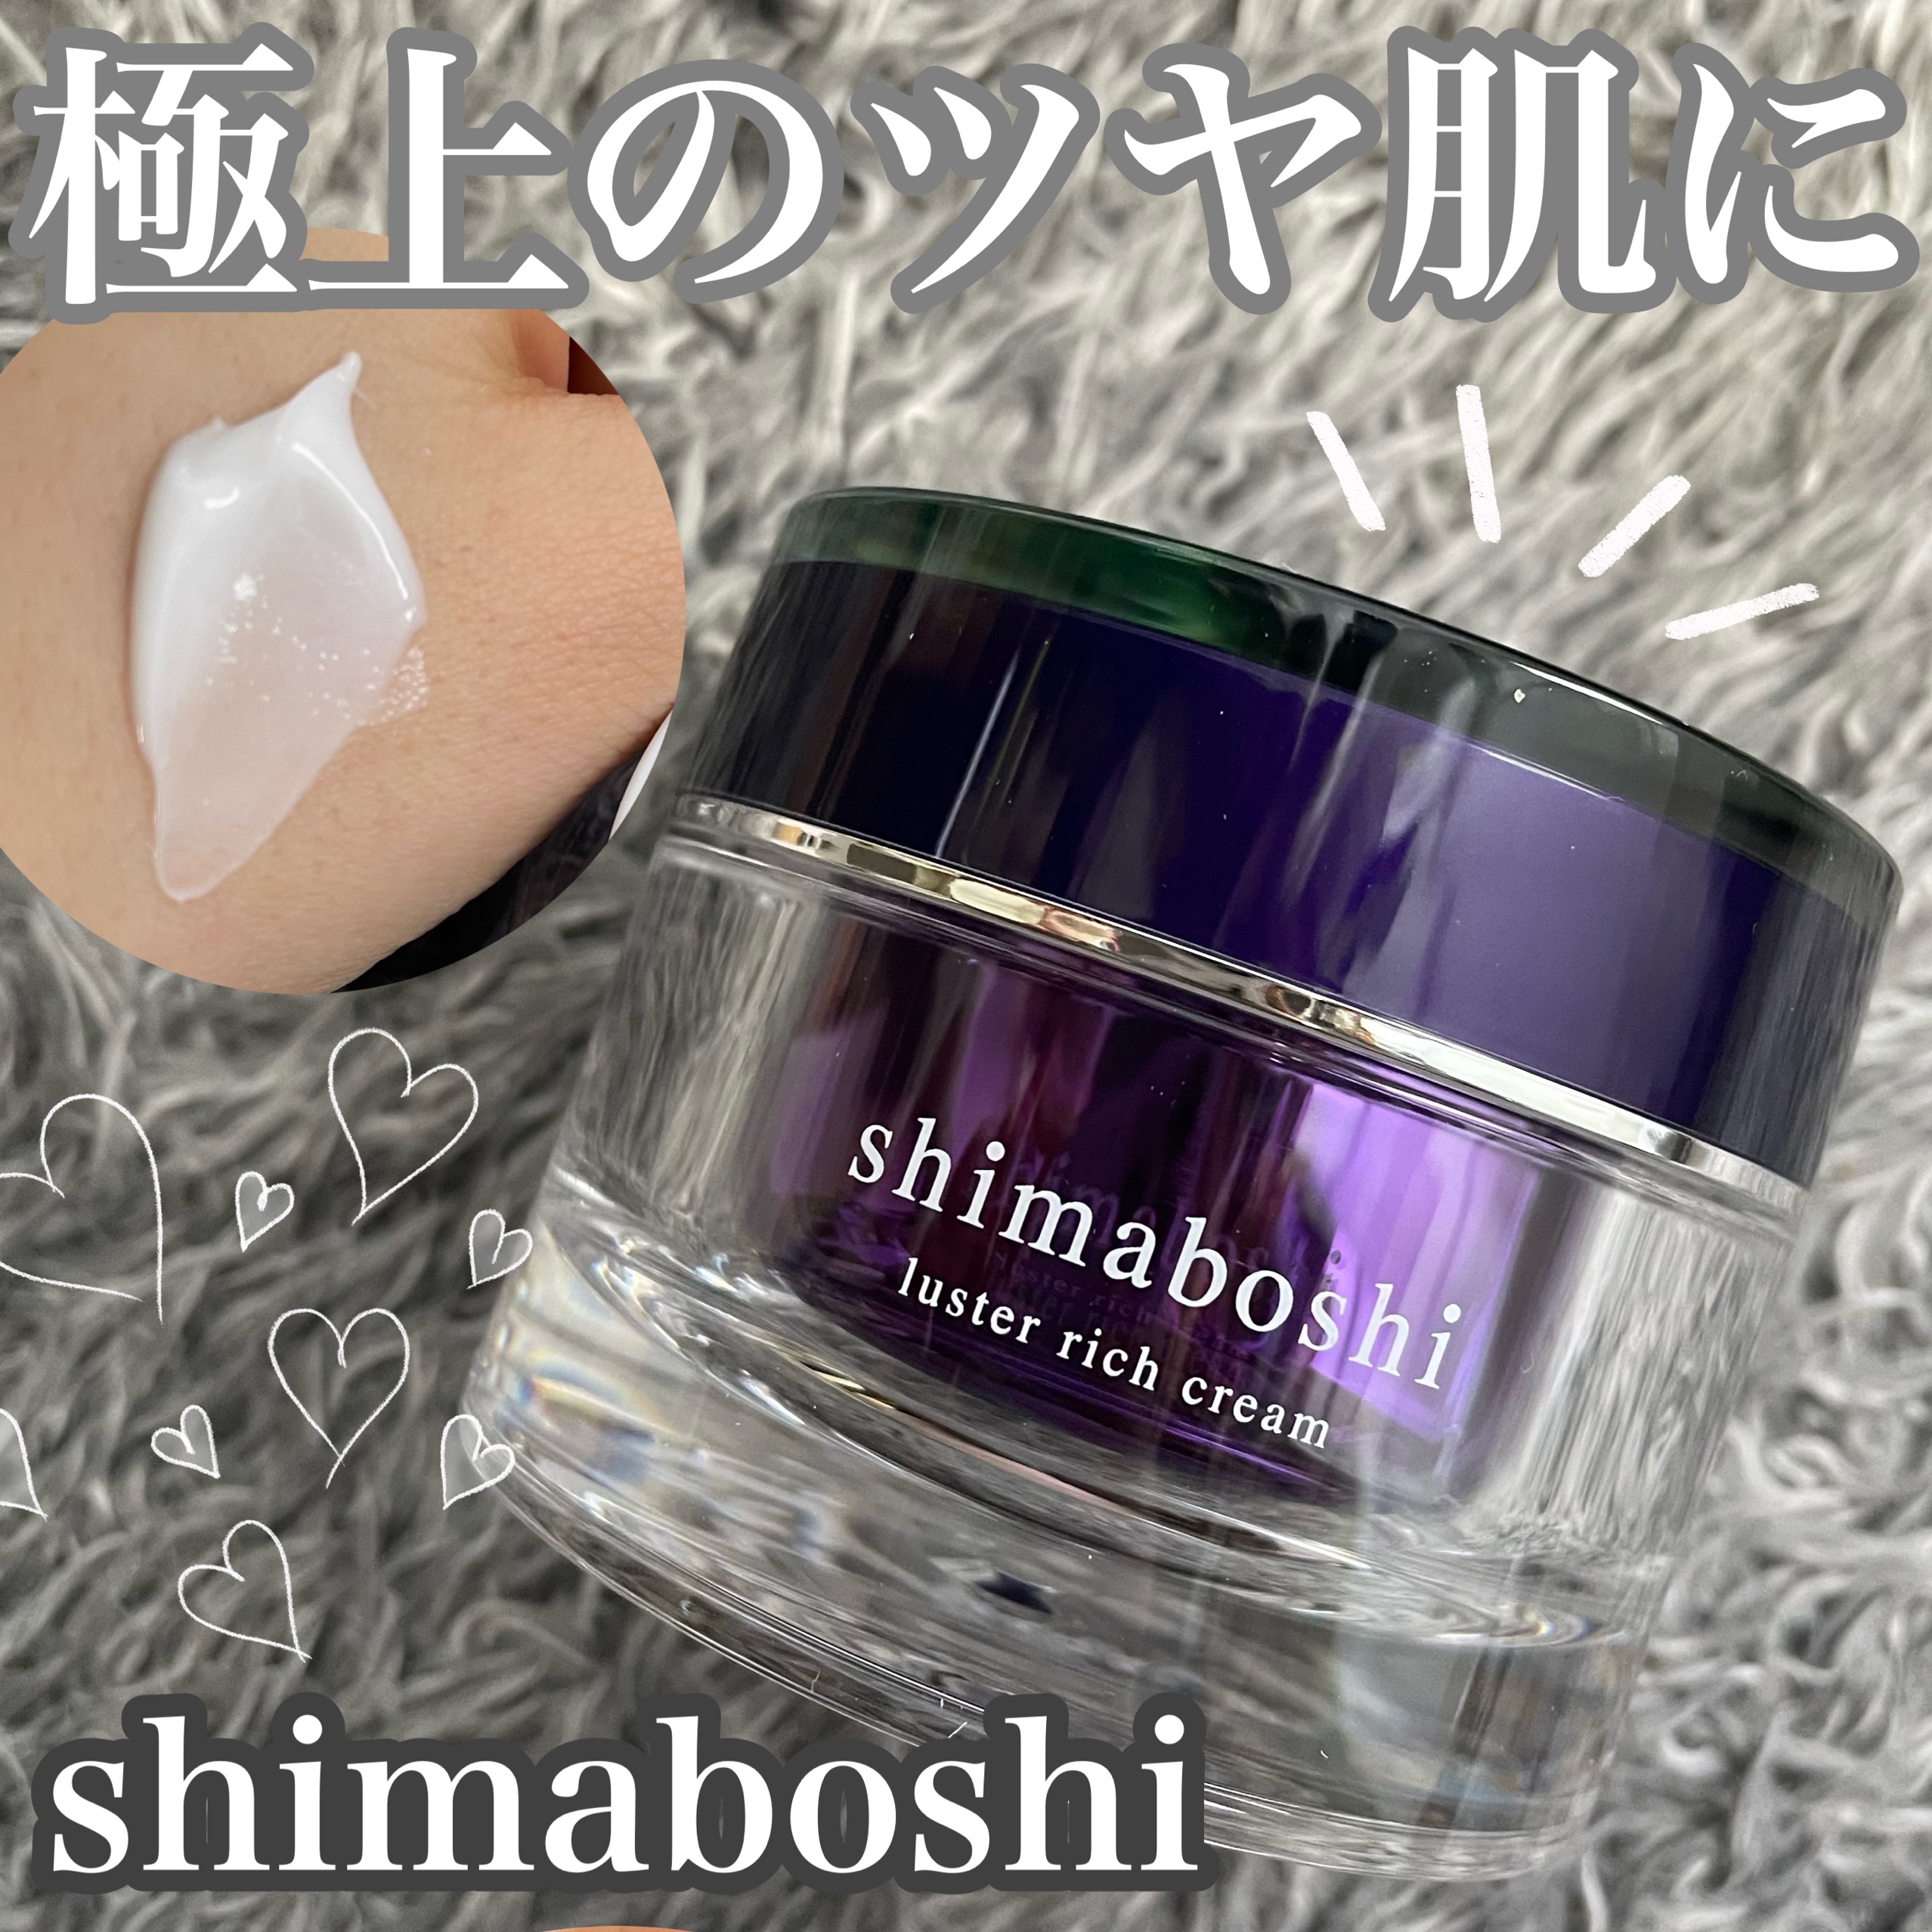 shimaboshi(シマボシ) ラスターリッチクリームの口コミ・評判はどう 